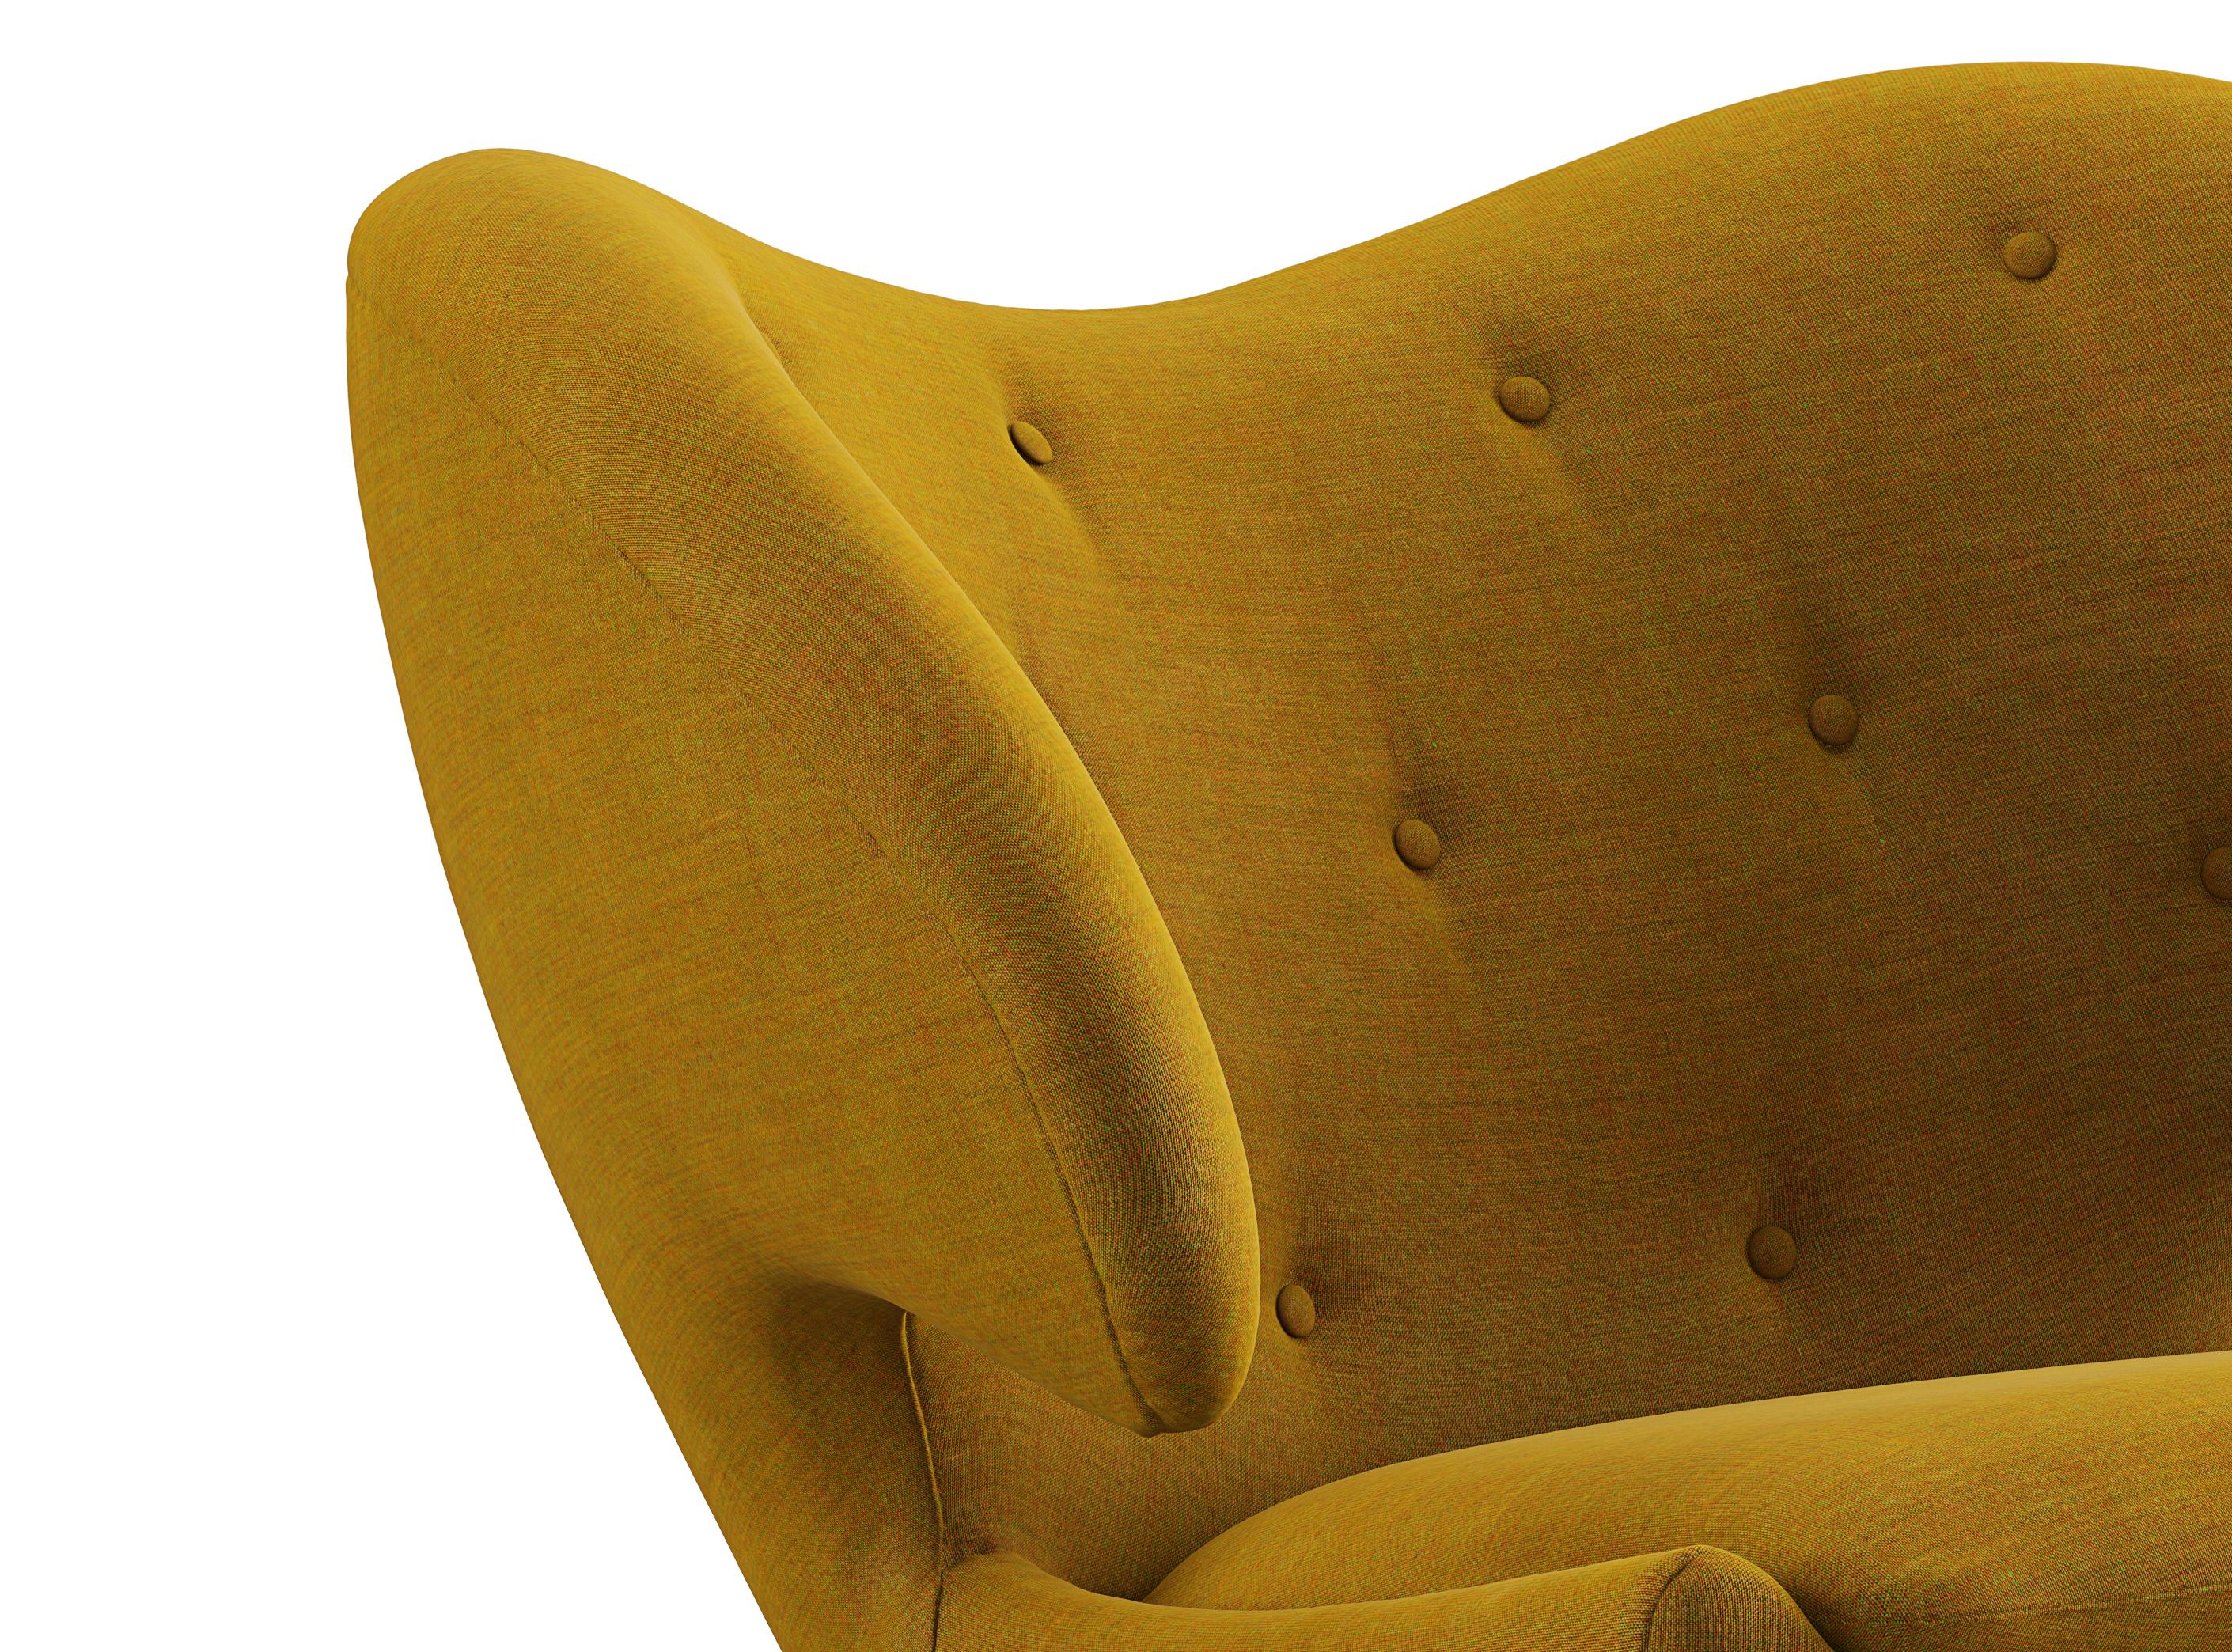 Danish Finn Juhl Pelican Chair Upholstered in Wood and Fabric